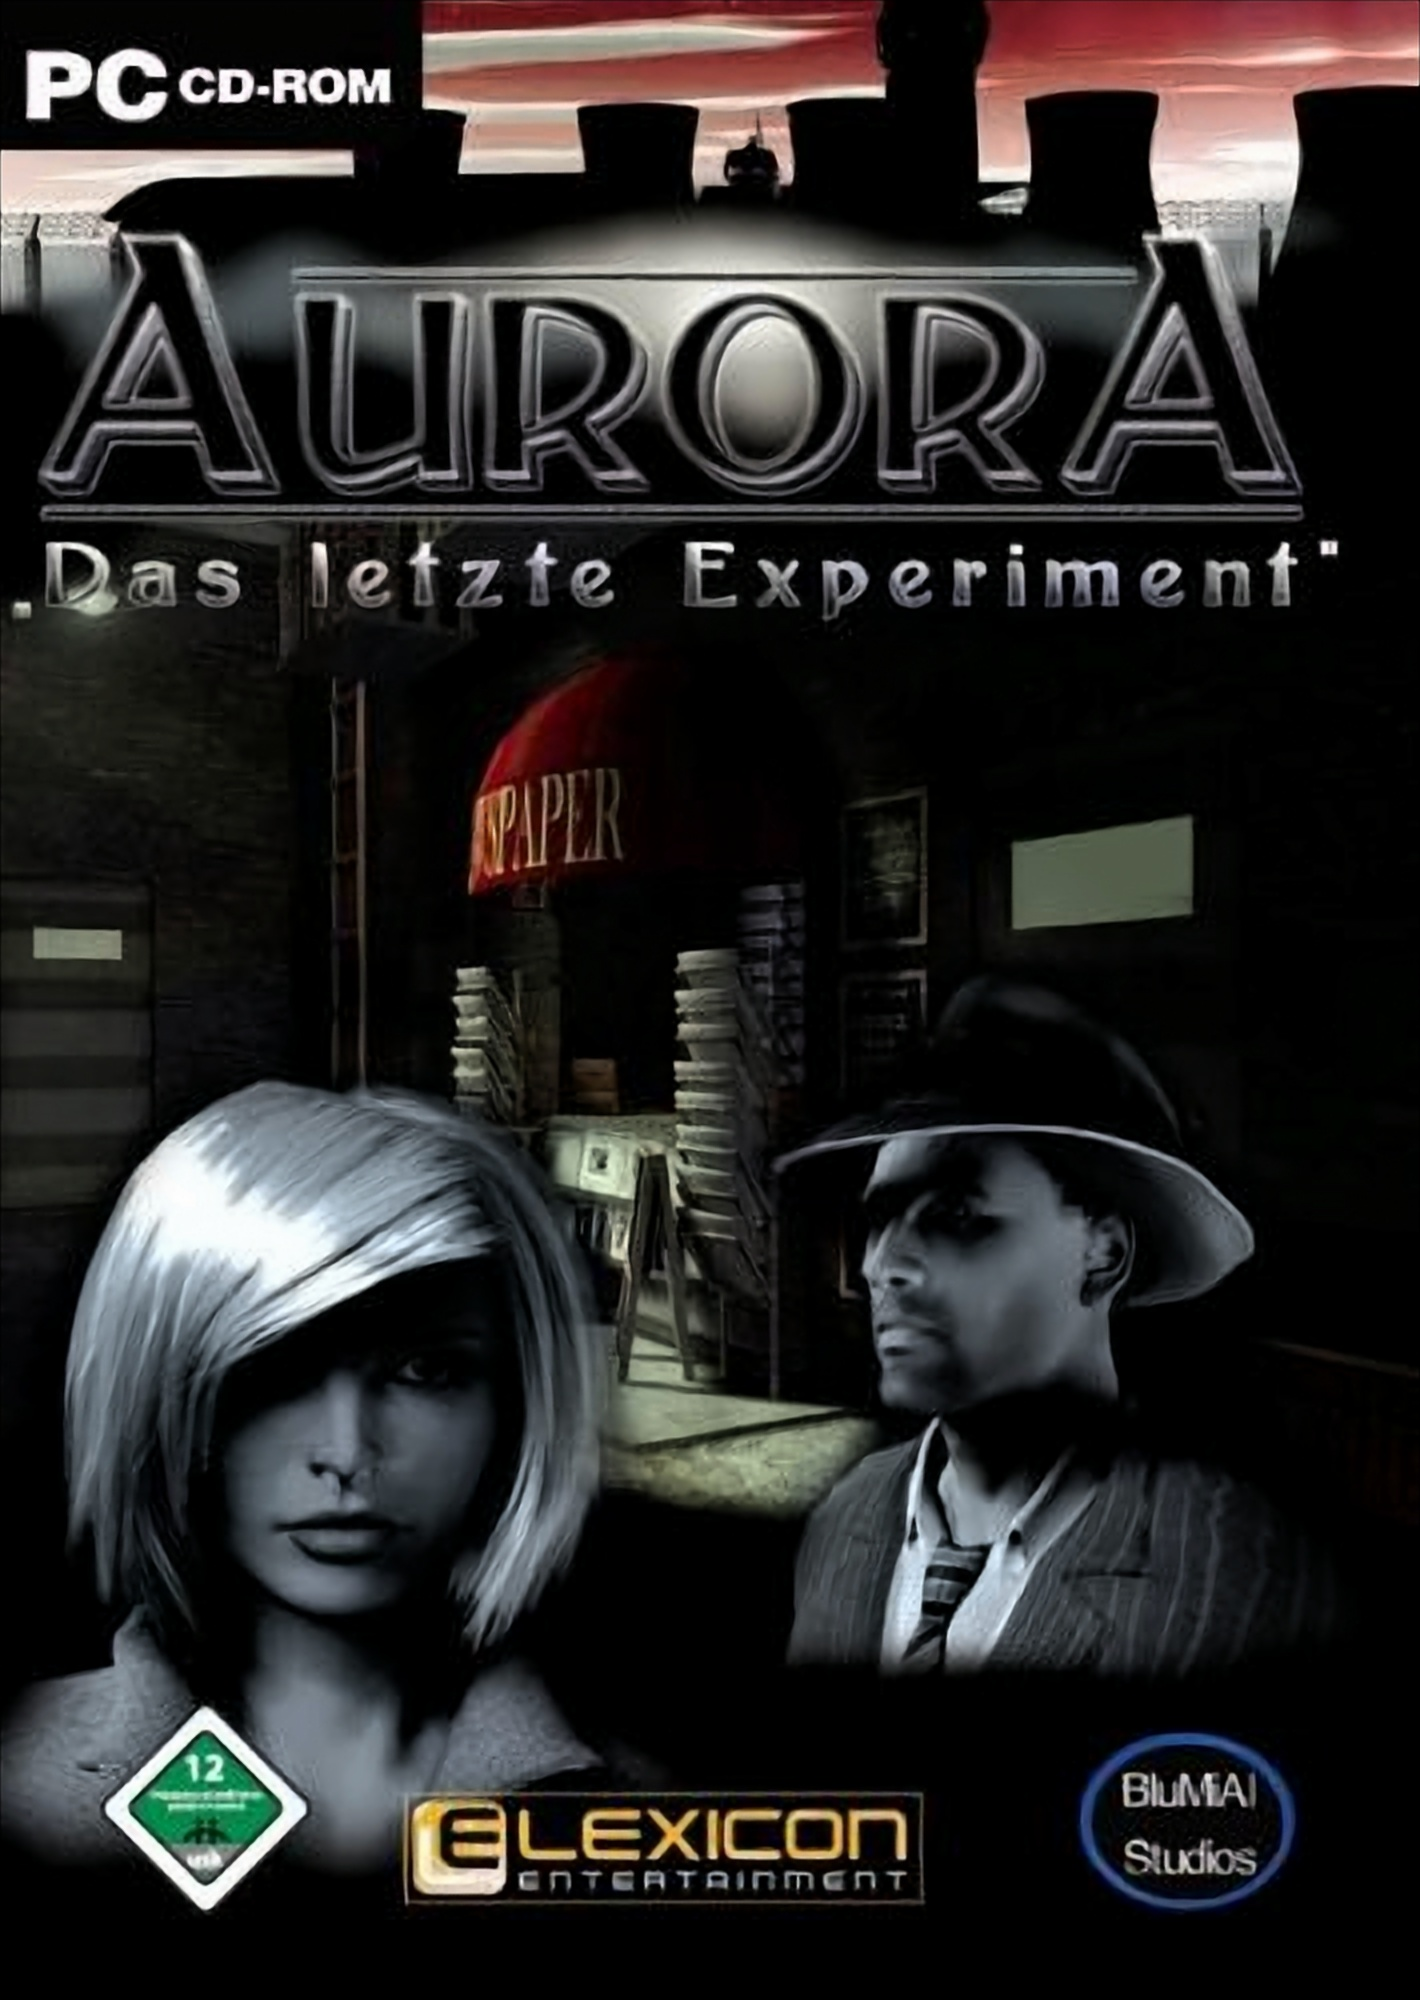 Experiment Das letzte [PC] Aurora - -